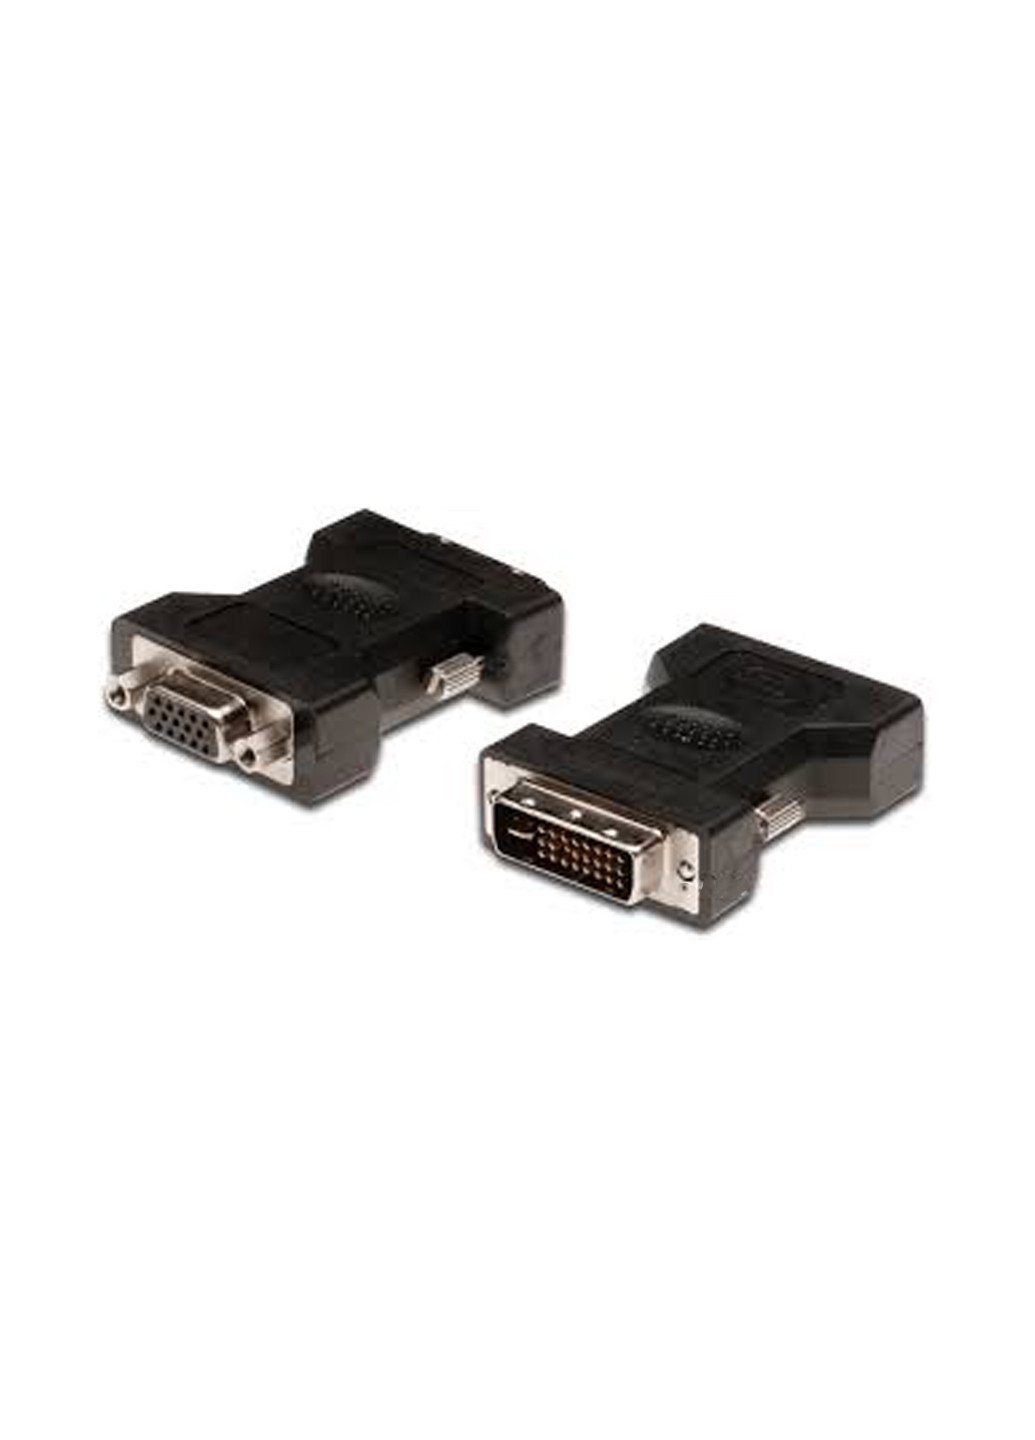 Адаптер DVI to VGA (DK-320504-000-S) Digitus адаптер dvi to vga (dk-320504-000-s) (136463746)